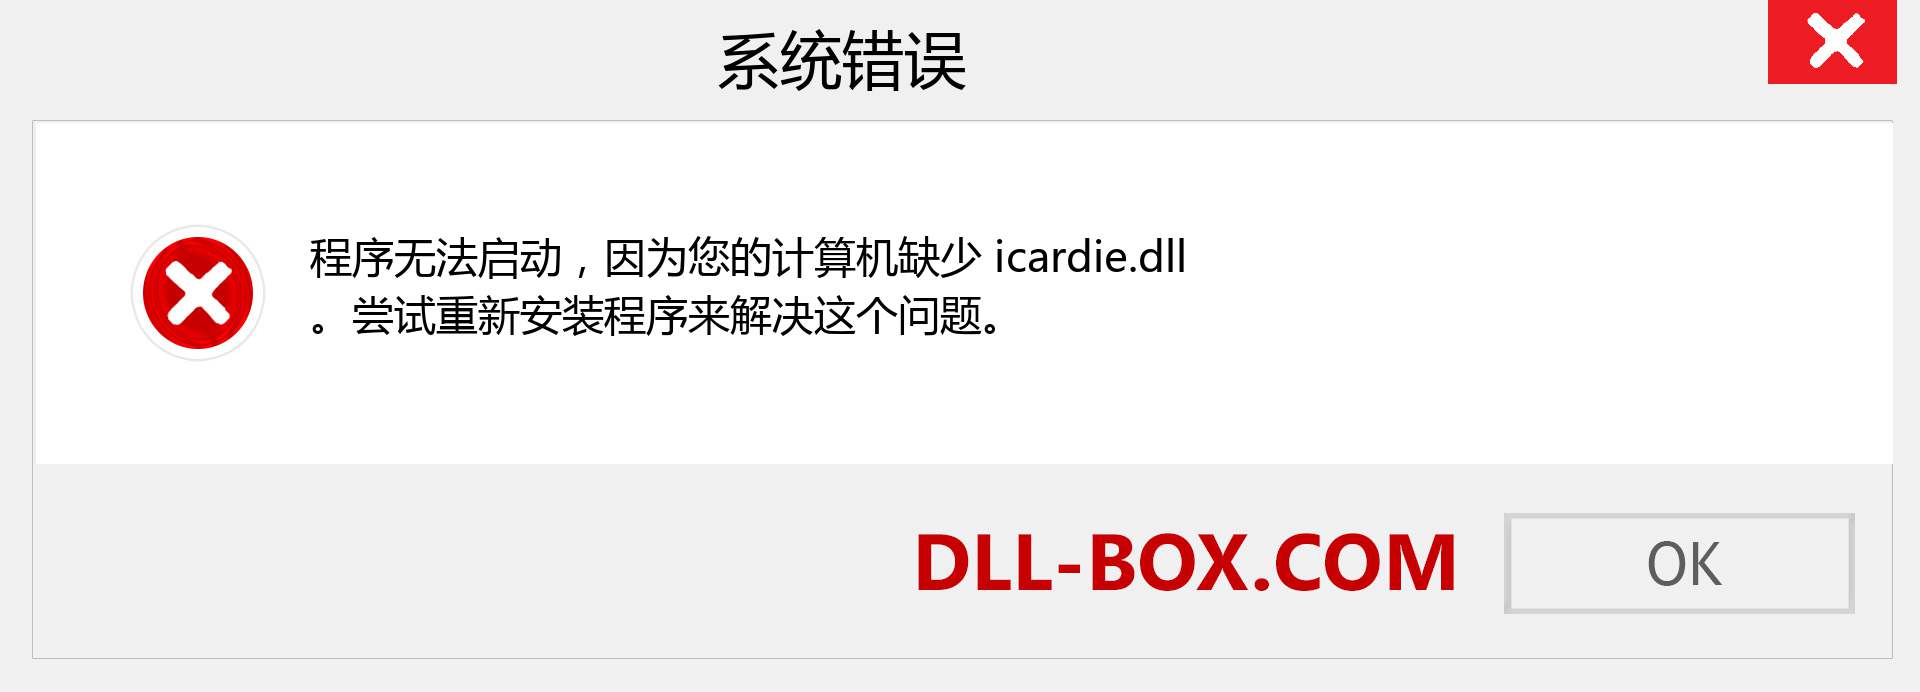 icardie.dll 文件丢失？。 适用于 Windows 7、8、10 的下载 - 修复 Windows、照片、图像上的 icardie dll 丢失错误